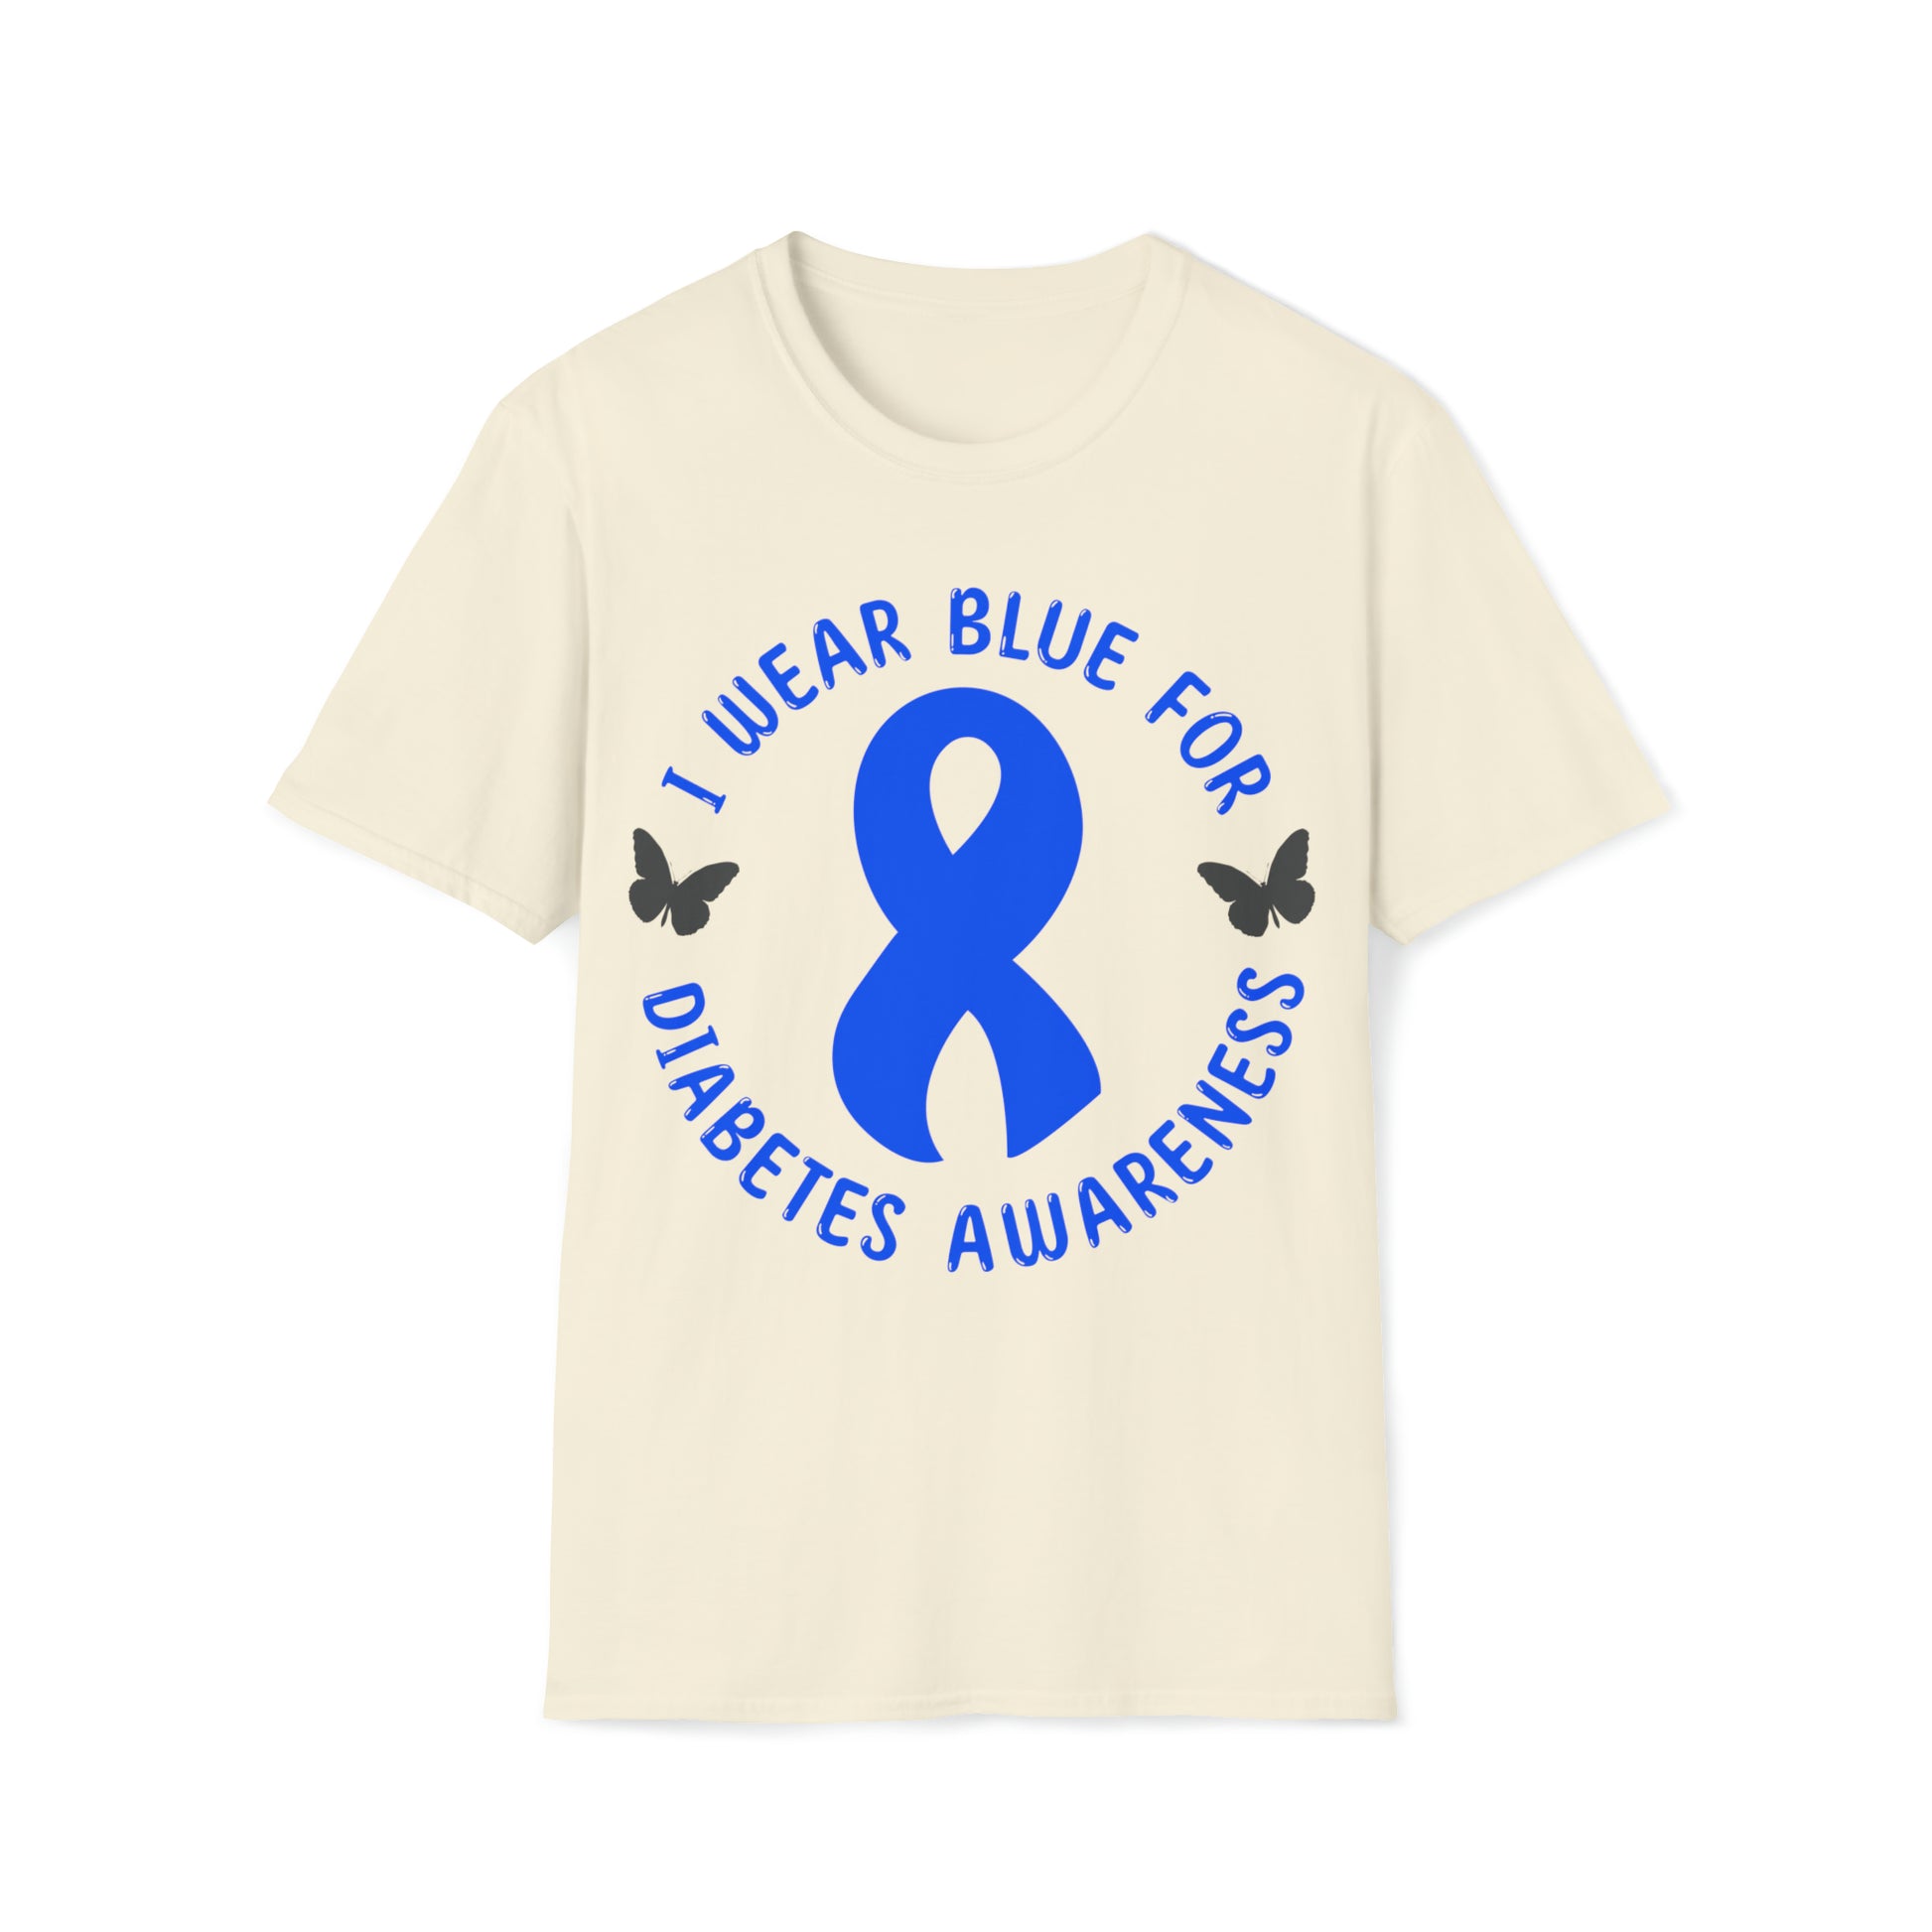 I Wear Blue For Diabetes Awareness Shirt